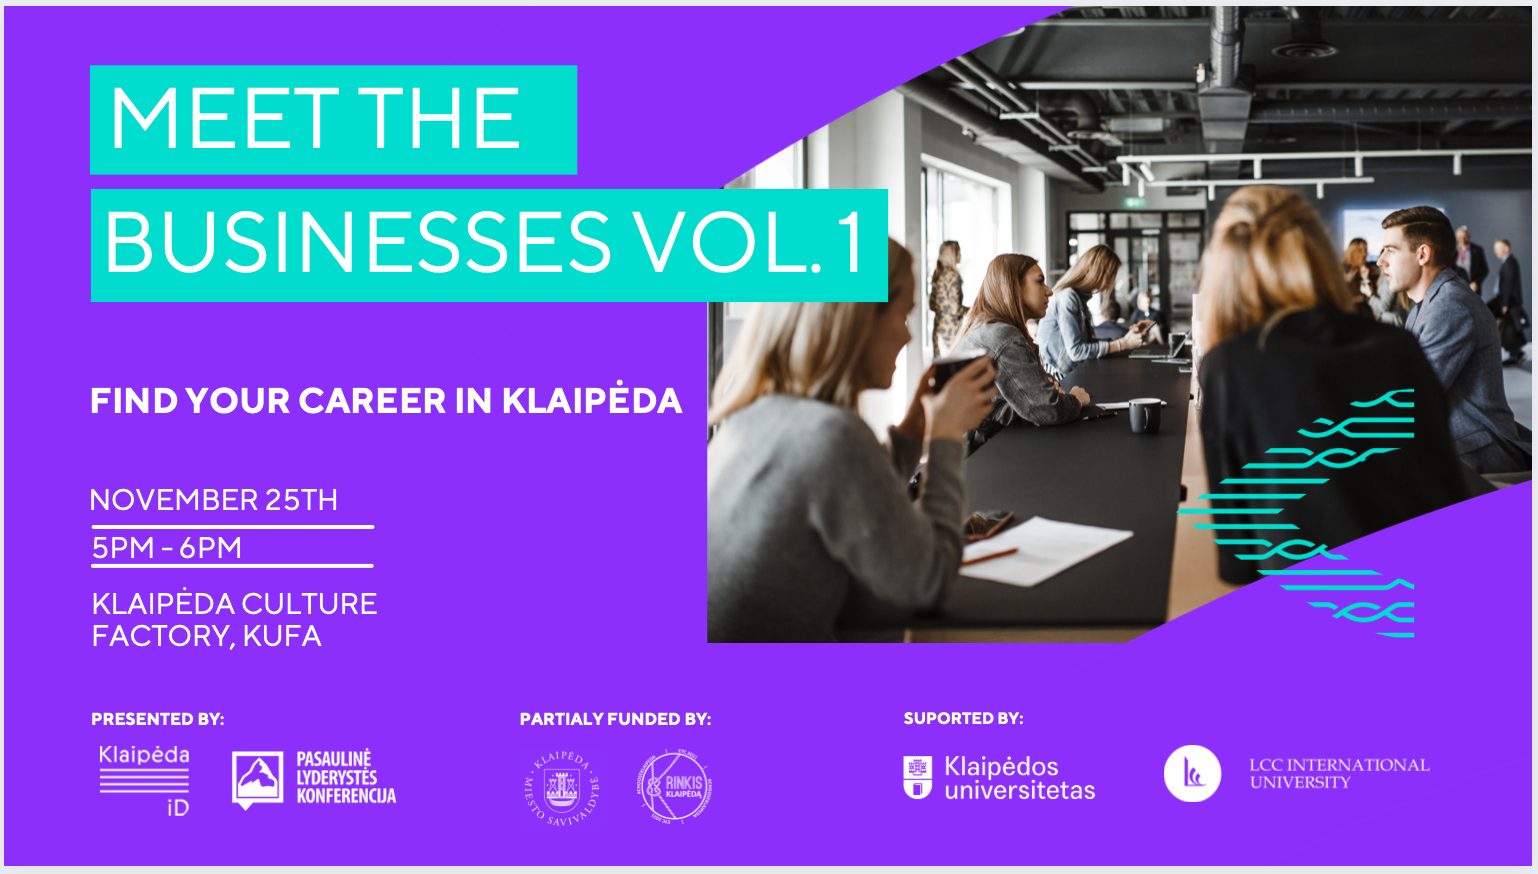 Meet the businesses | Find your career in Klaipėda